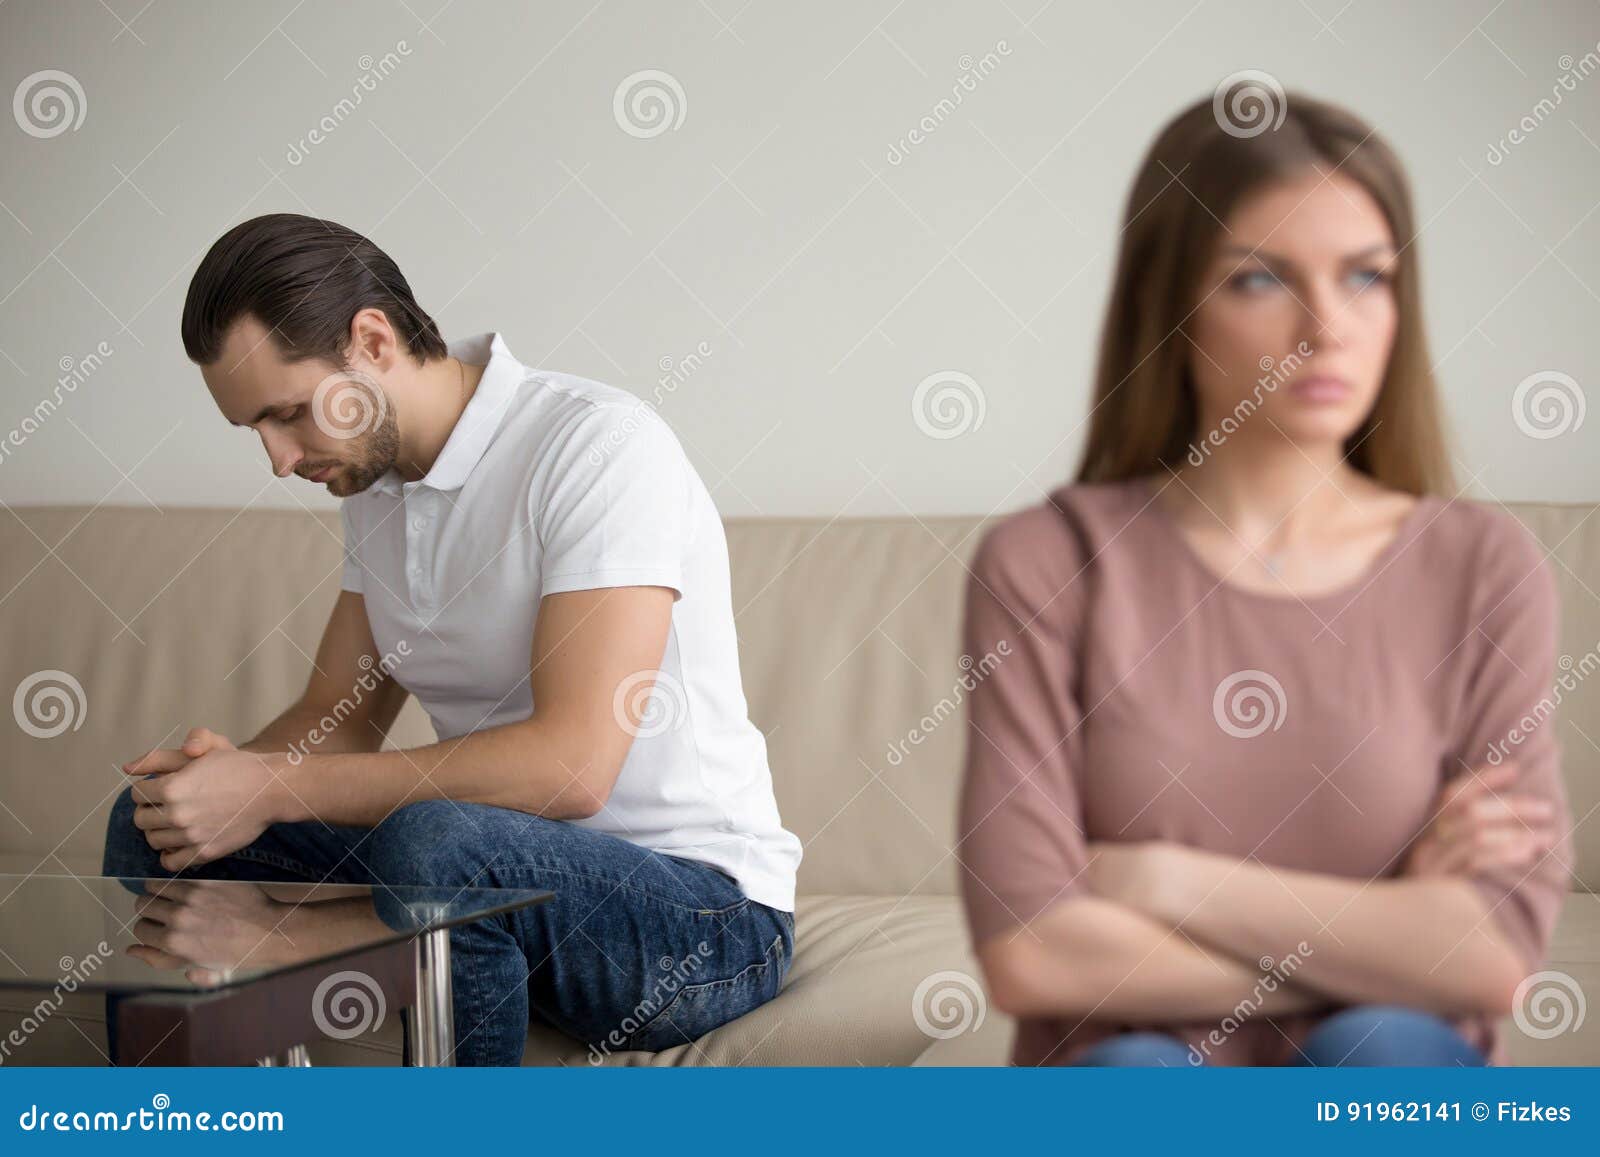 sad husband watches wife